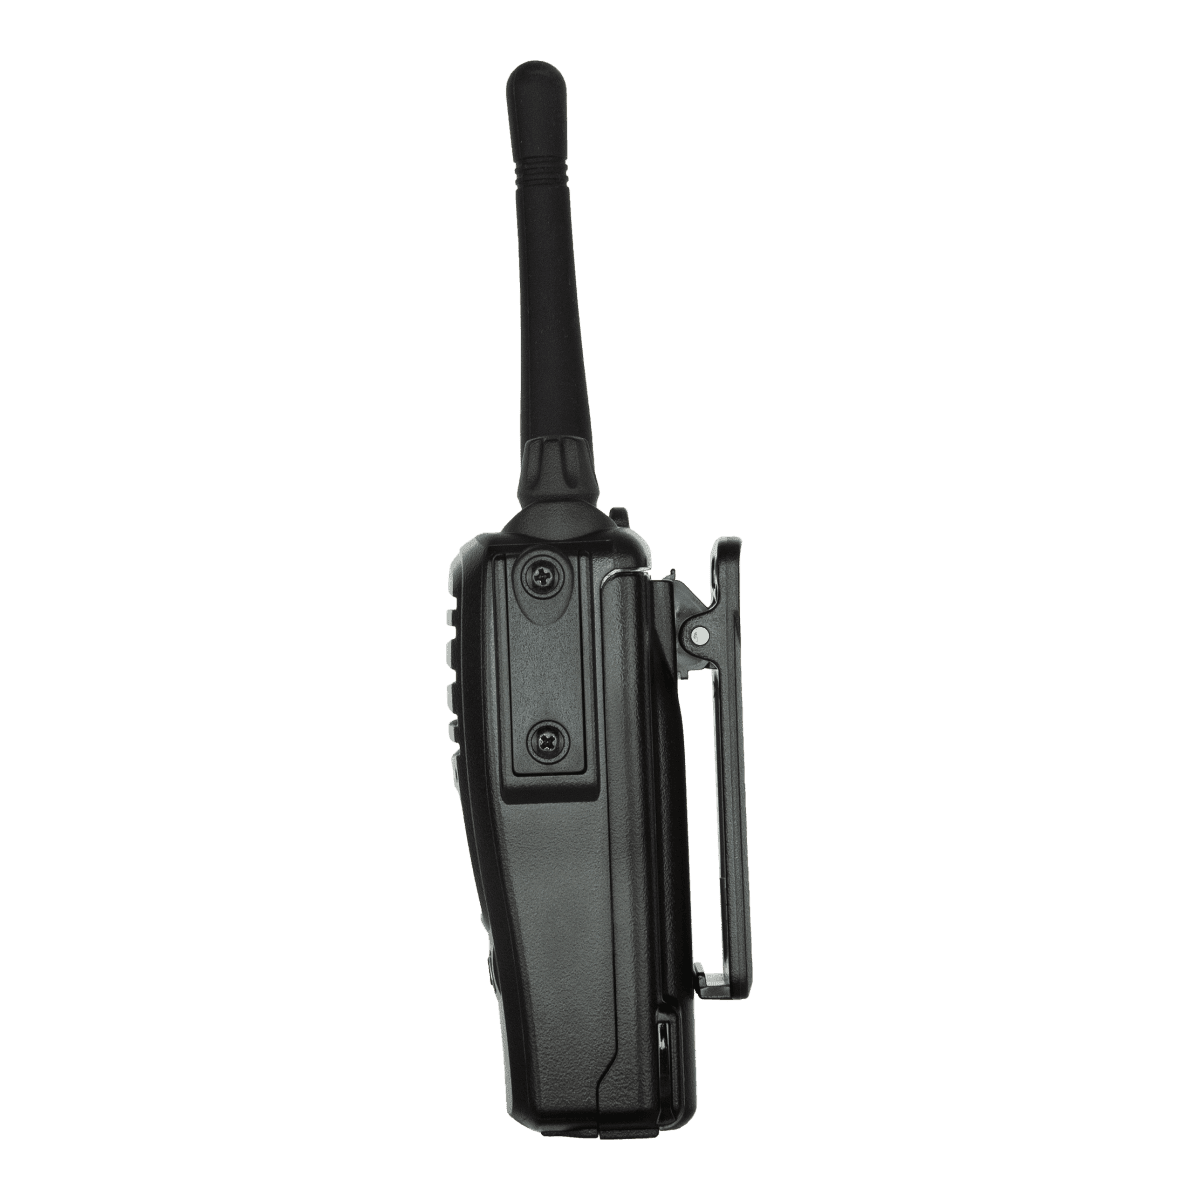 GME TX6160TP 5/1 Watt UHF CB Handheld Radio - Twin Pack - NZ Offroader